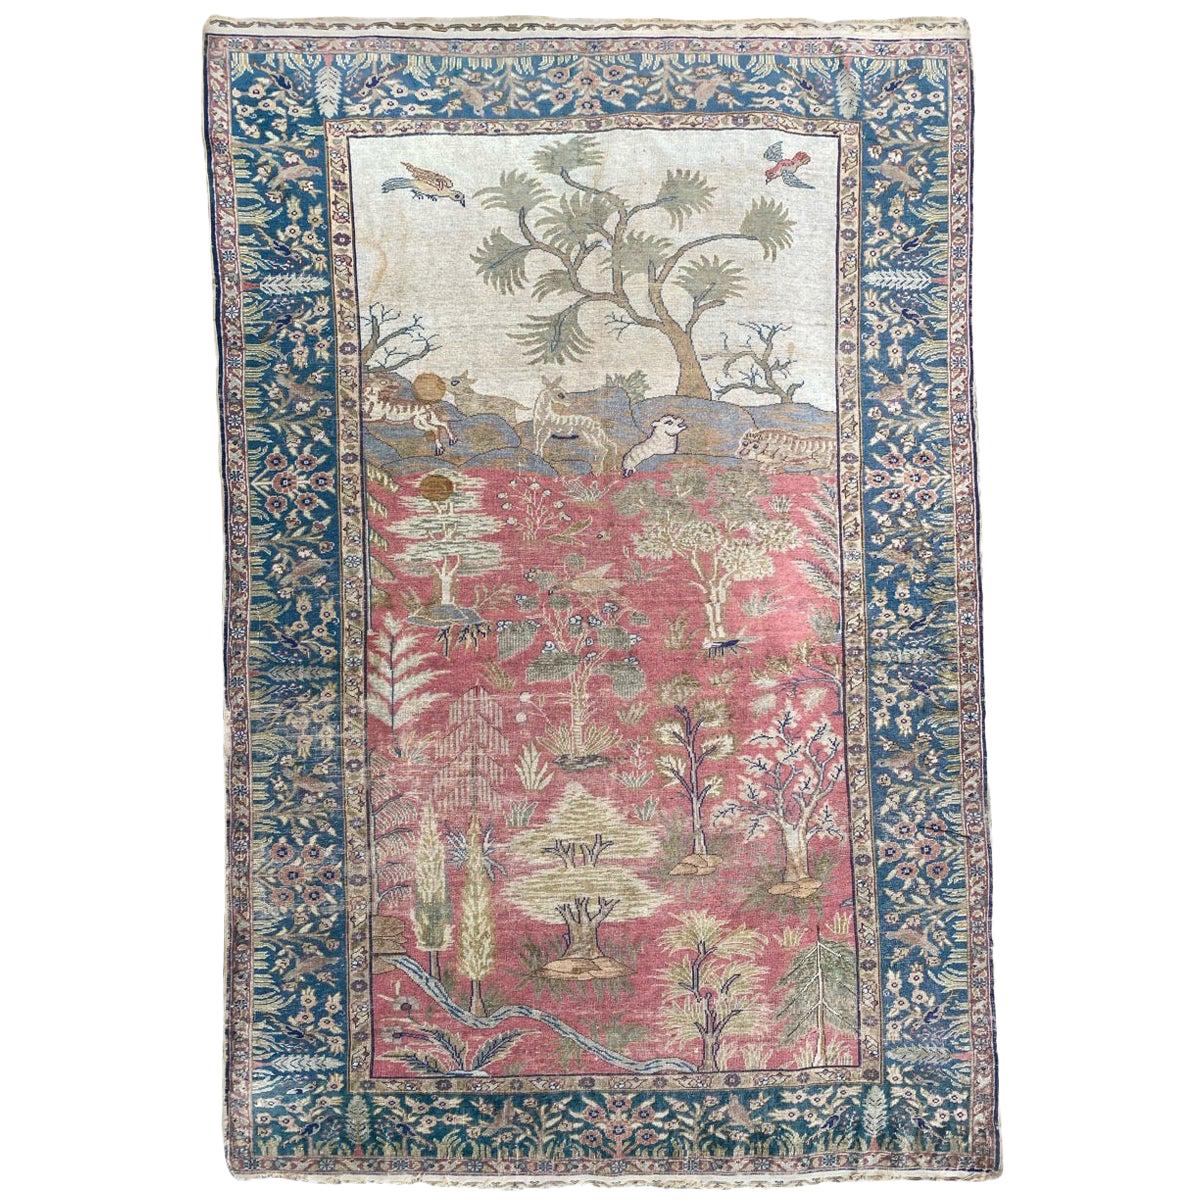 Bobyrug's Wonderful Antique Silk Turkish Cesareh Rug (Merveilleux tapis turc en soie ancienne)